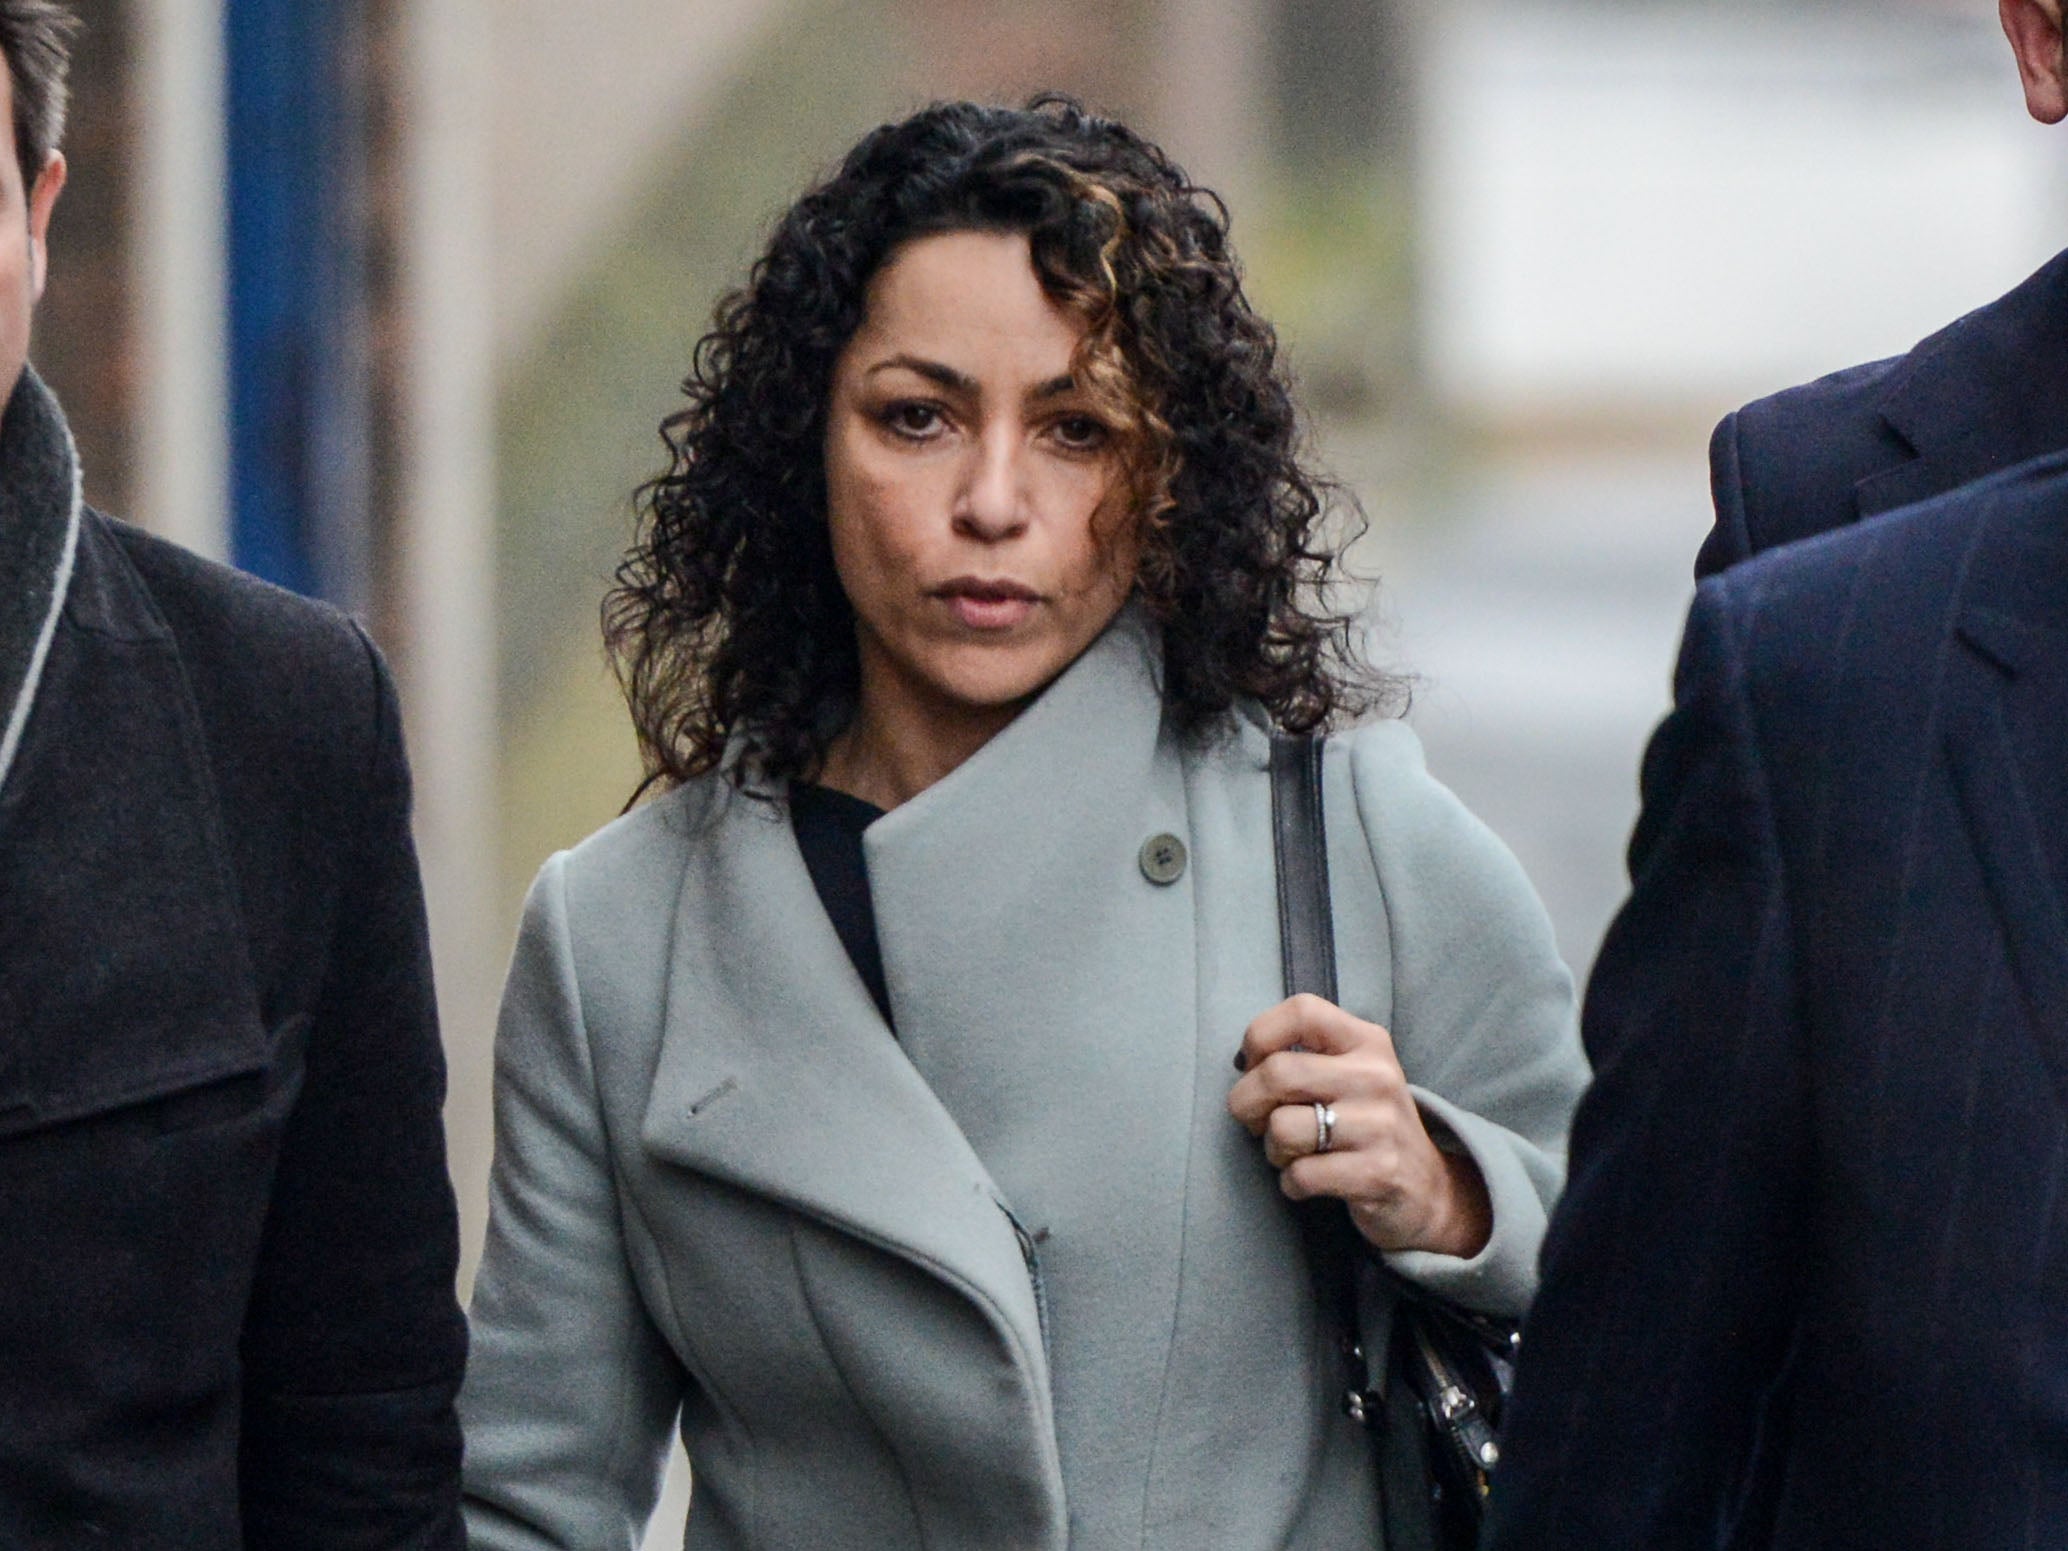 Eva Carneiro arrives at Montague Court, Croydon for an initial hearing in an employment tribunal